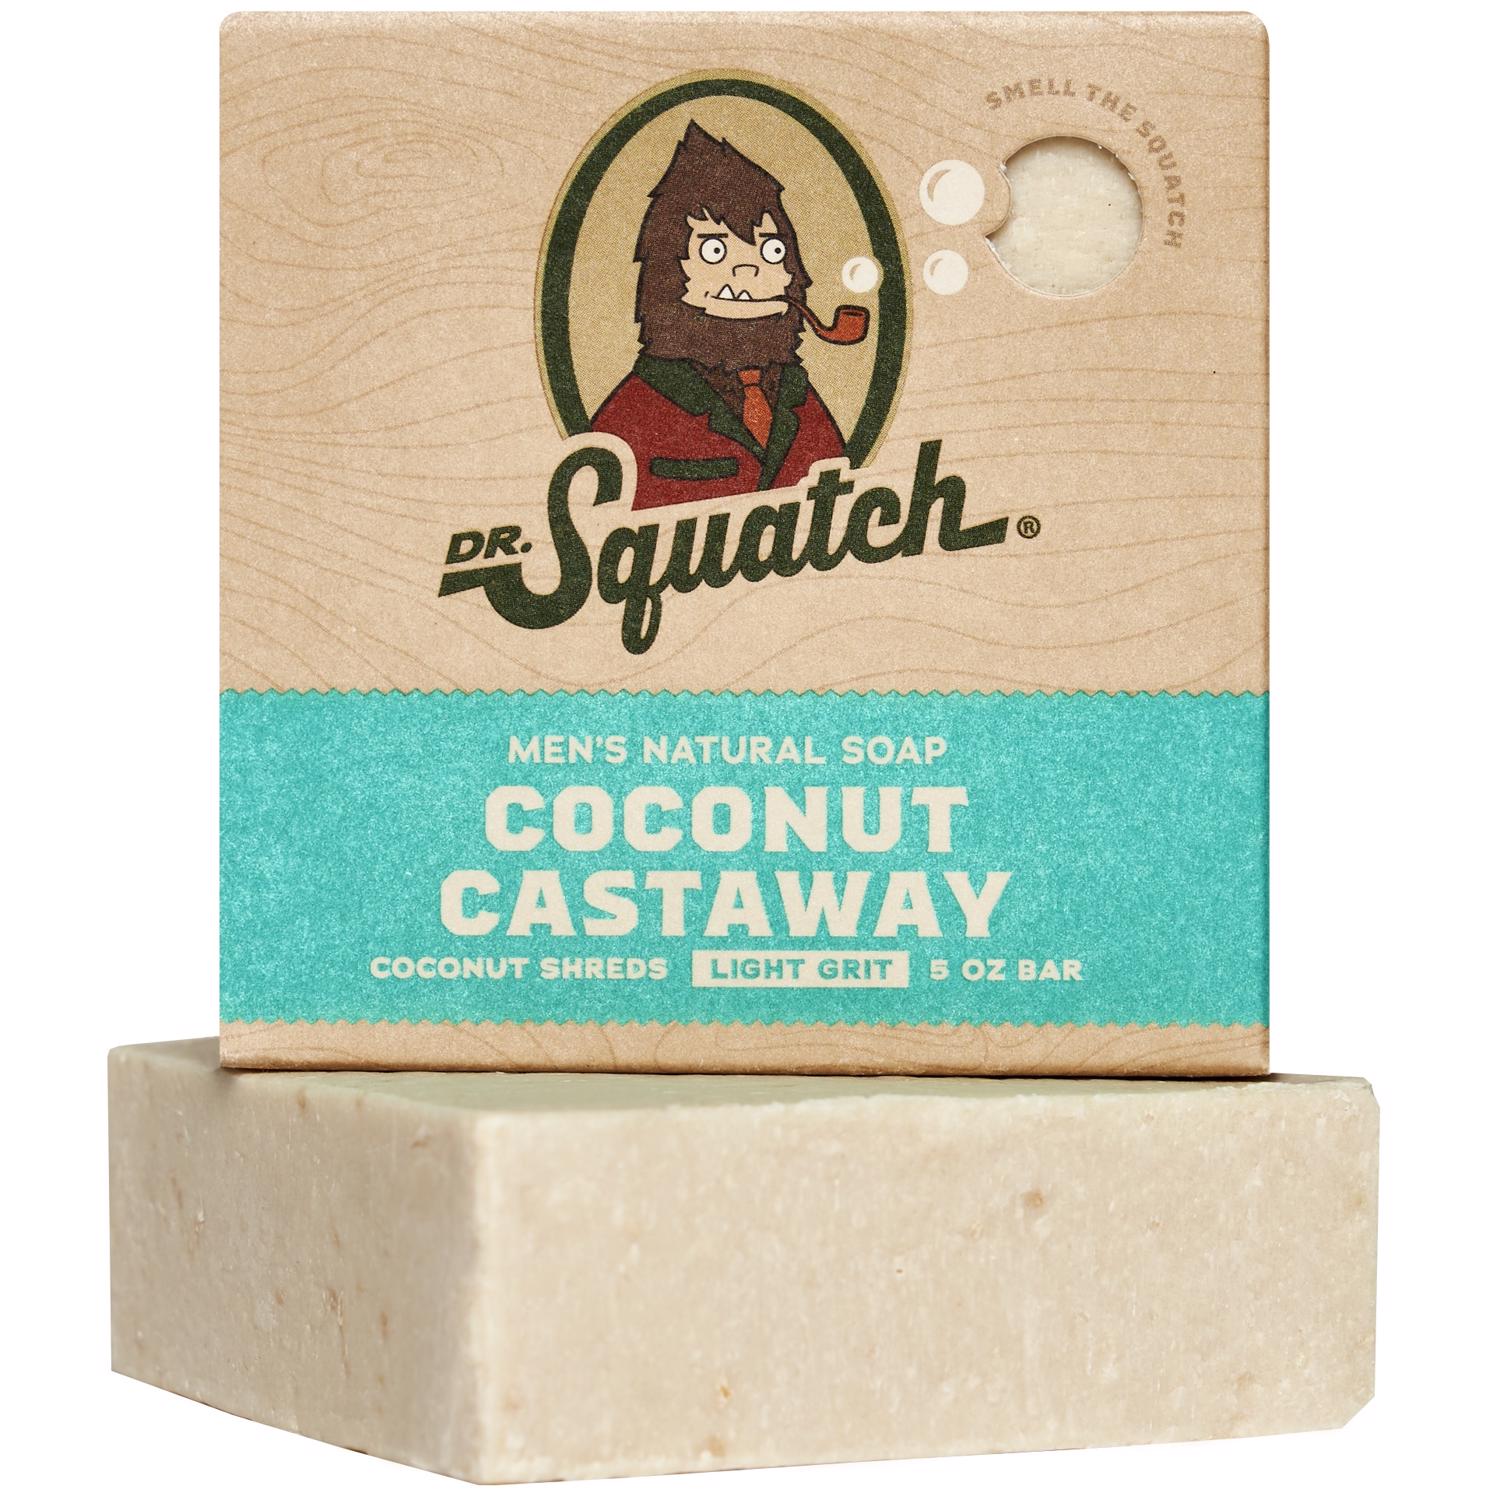 Dr. Squatch Coconut Castaway Deodorant, 2.65 oz